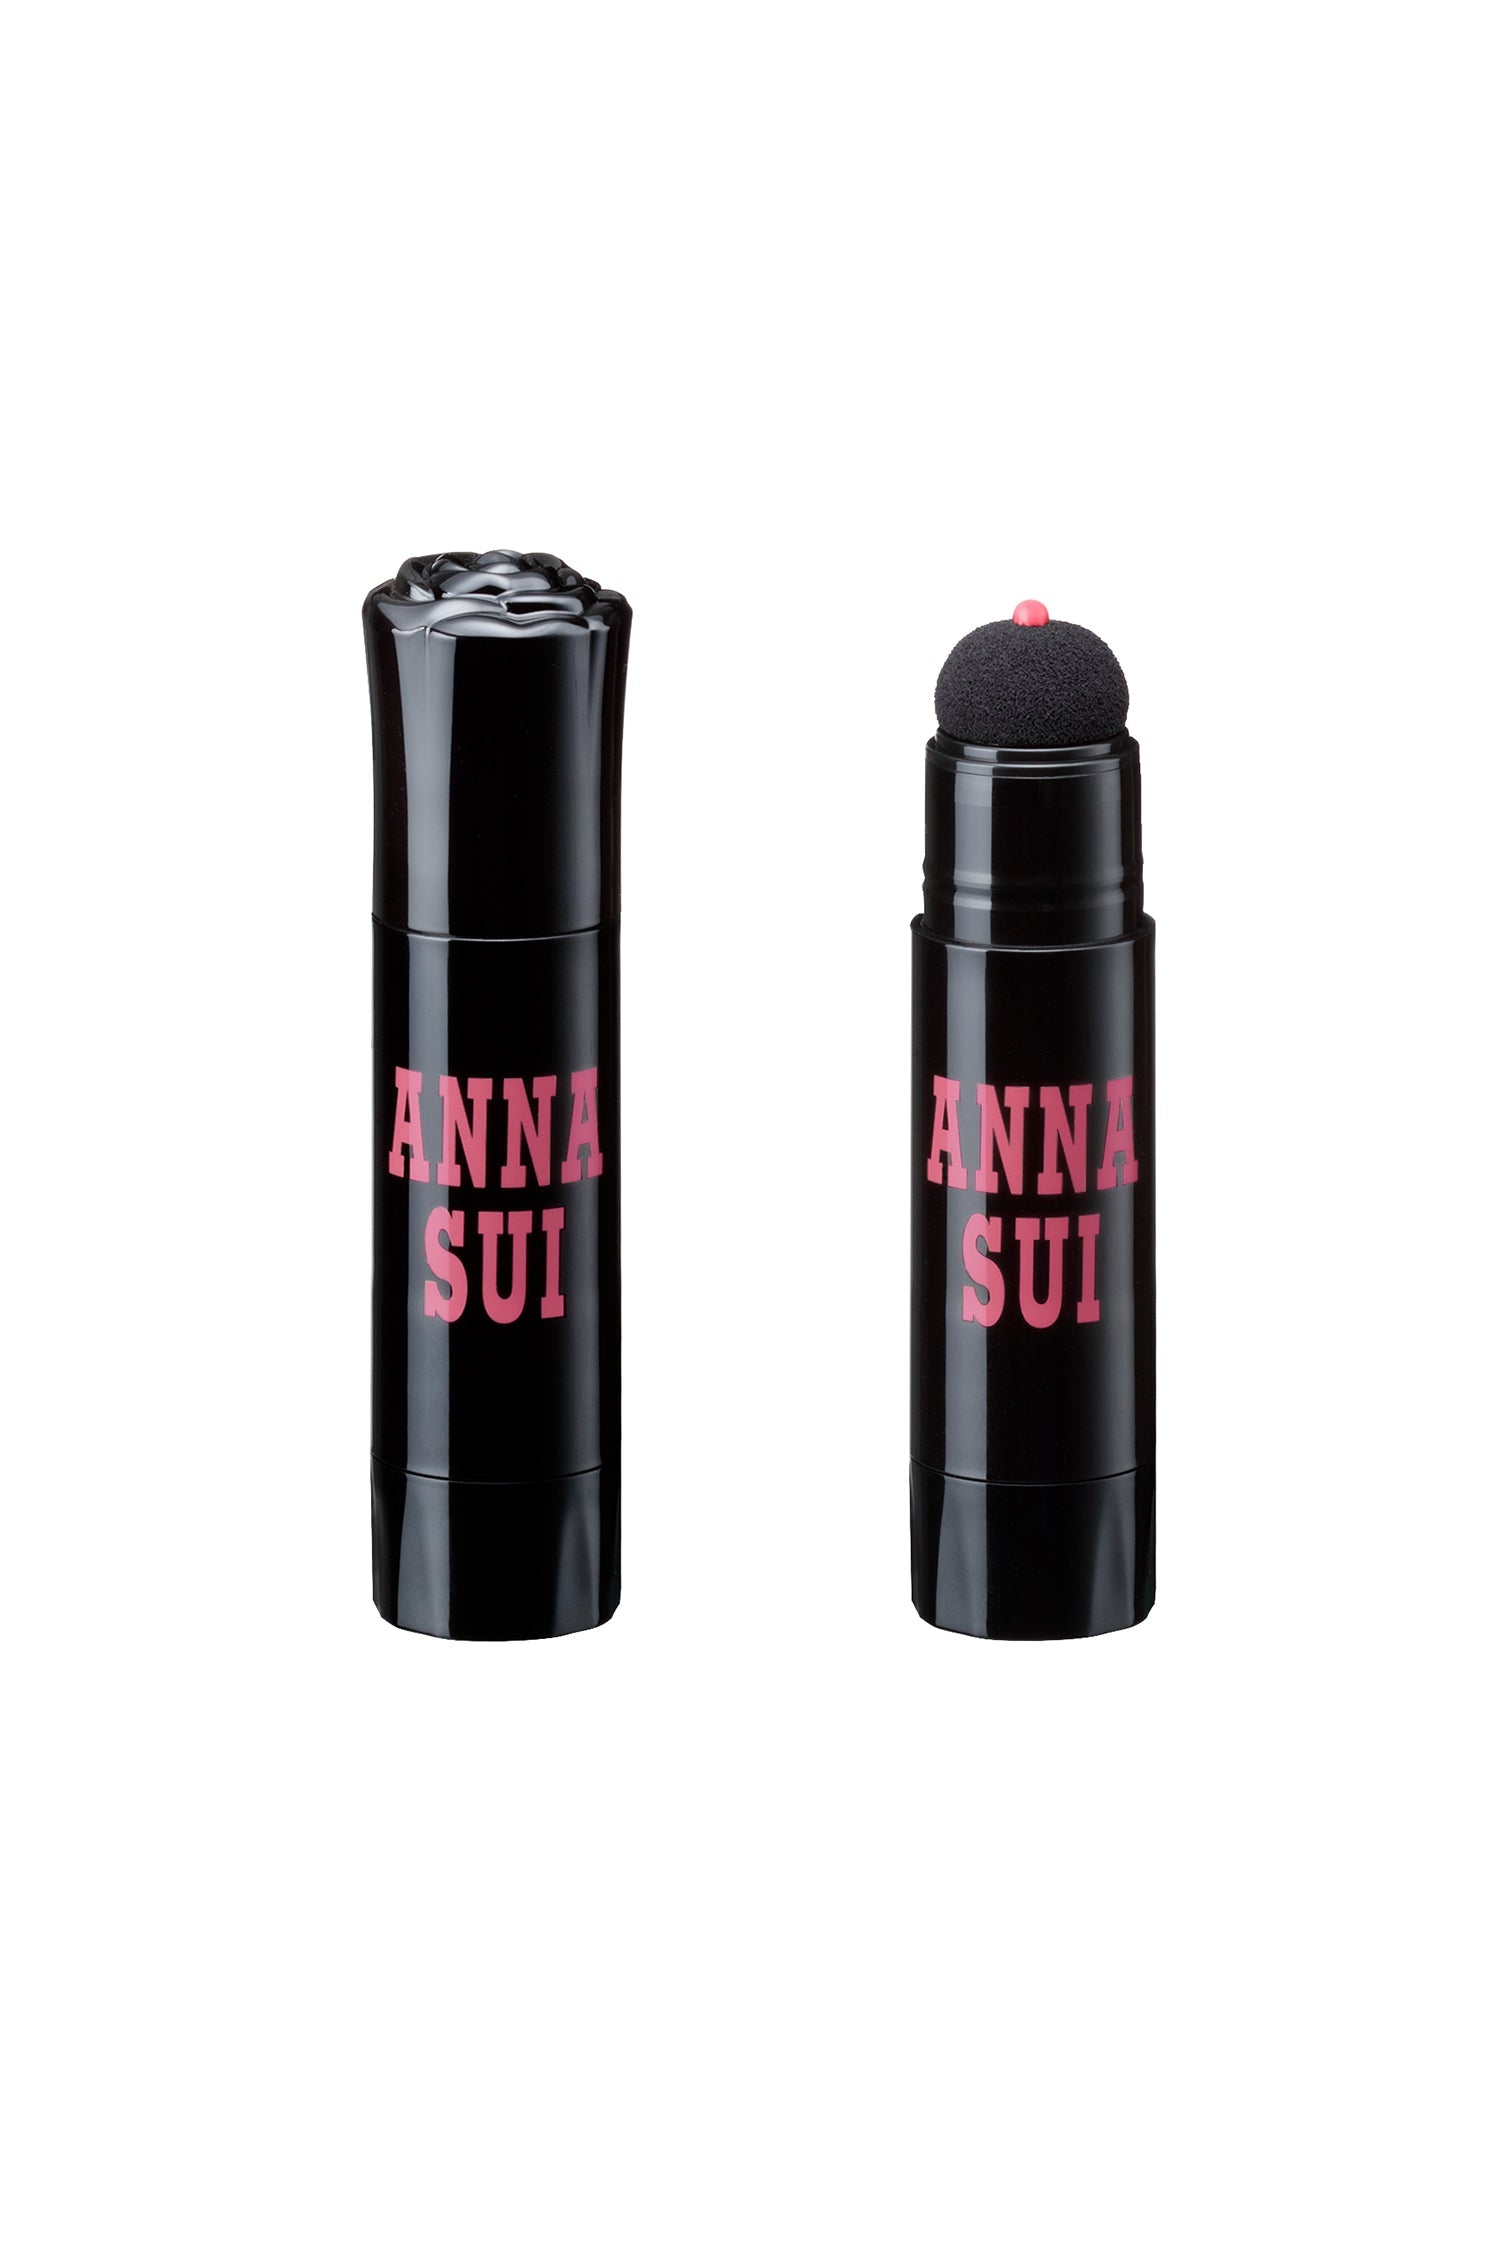 Sponge cheek liquid blush, Anna Sui on cylinder case, rose on top, round cushion sponge applicator